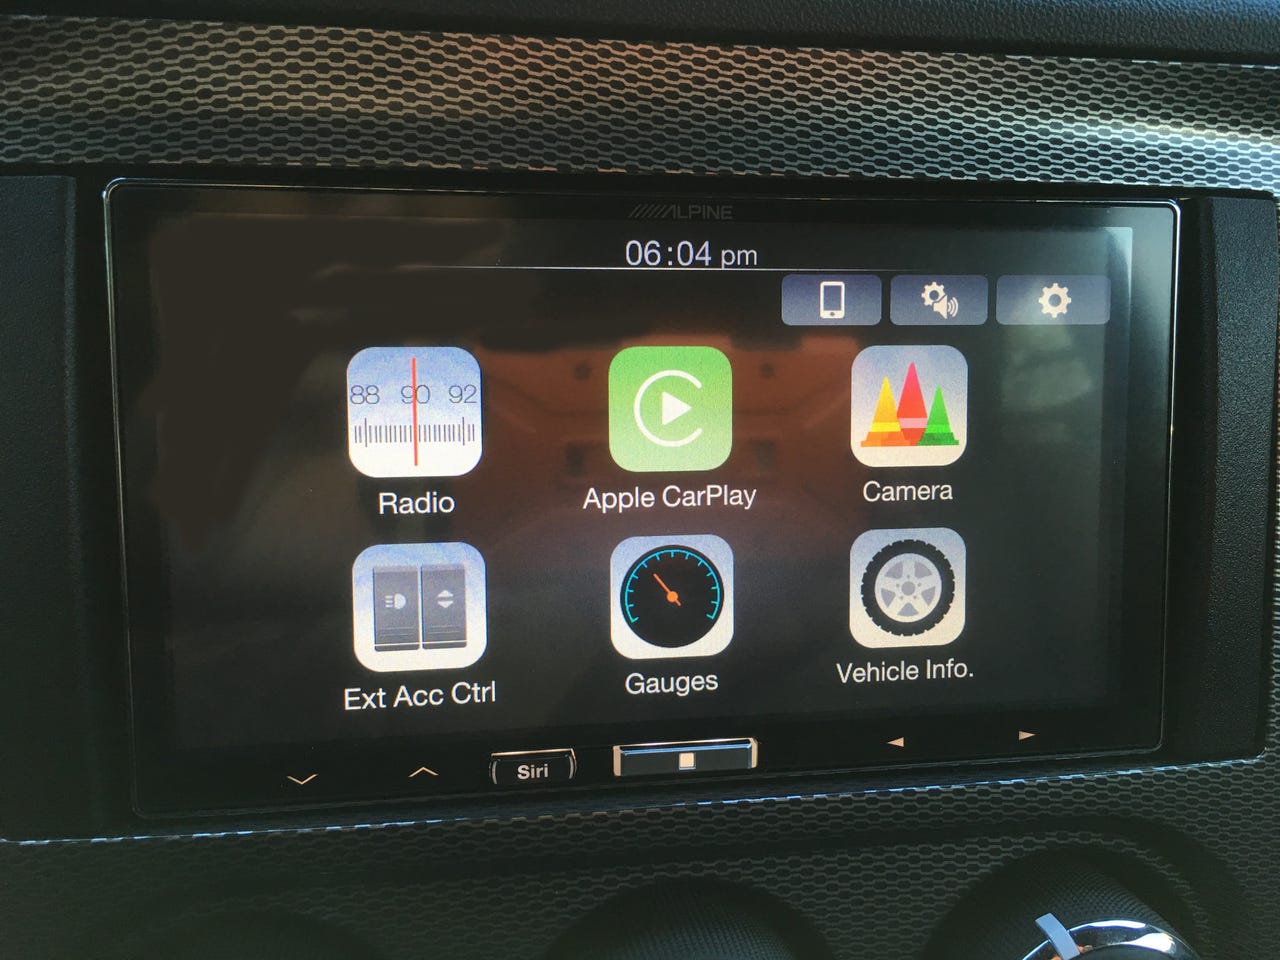 CarPlay - Apple Developer